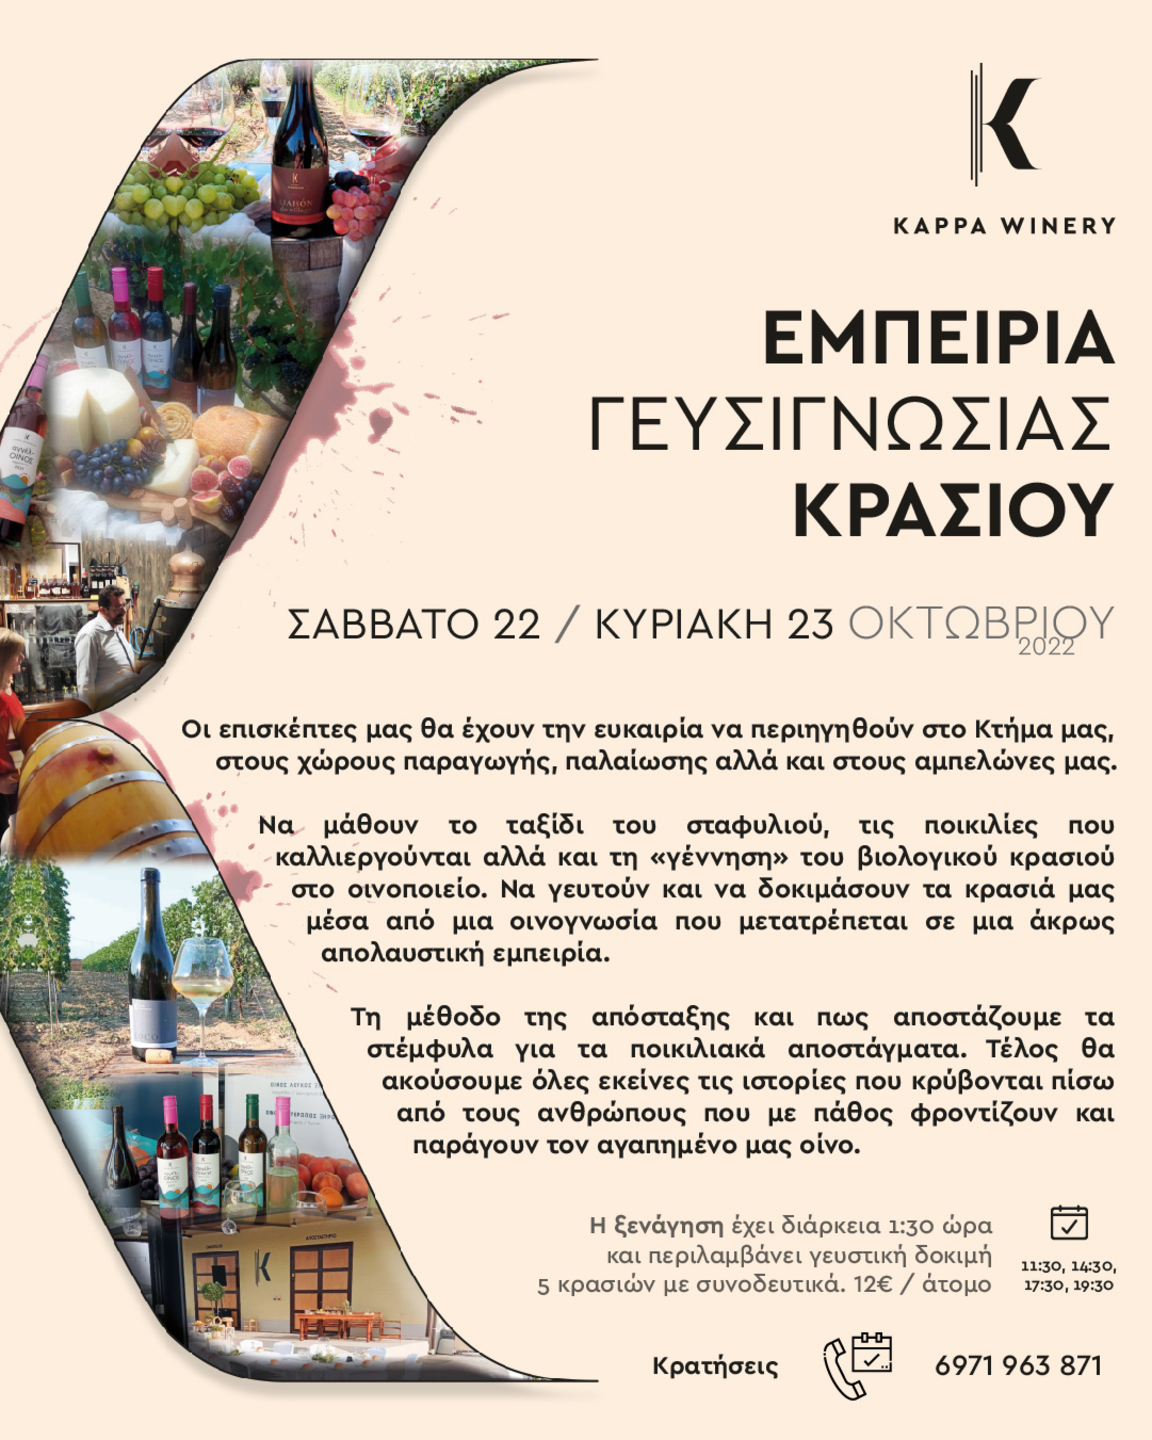 kappa winery: Εμπειρία γευσιγνωσίας κρασιού